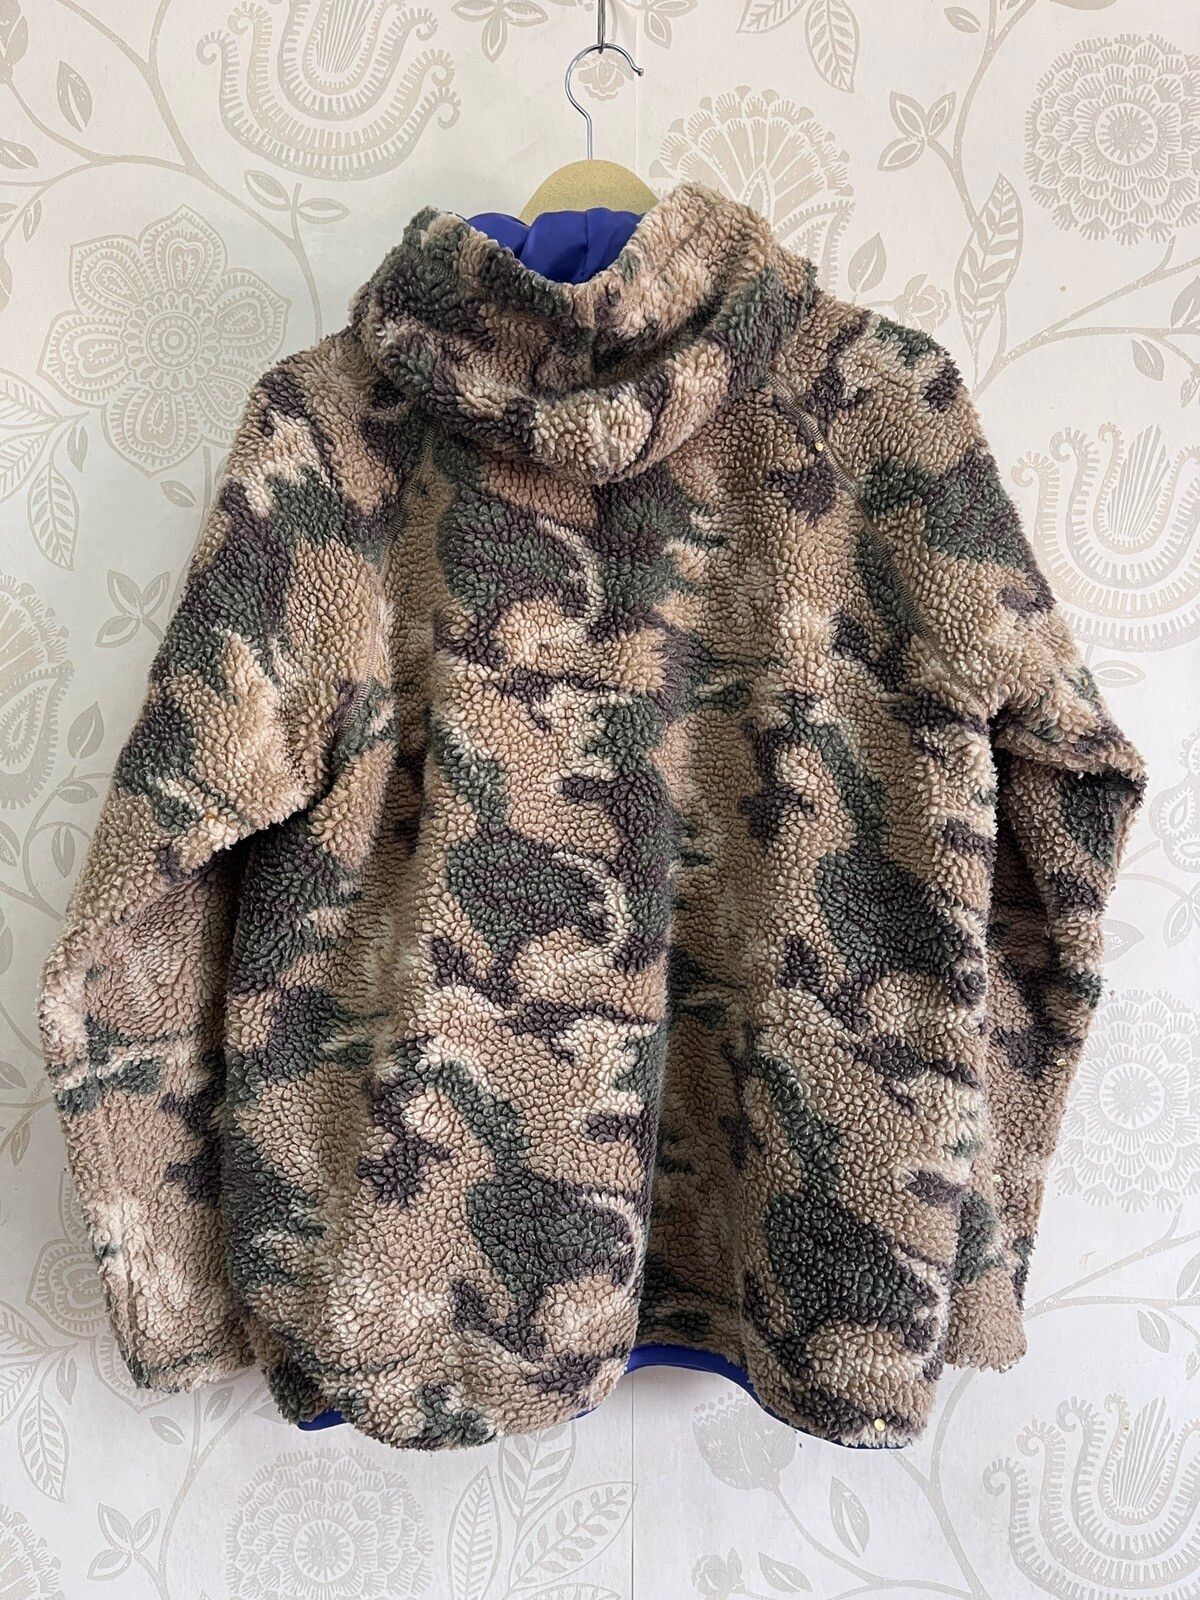 Military - Markey's Big Field Camouflage Sweater Hoodie Japanese - 21